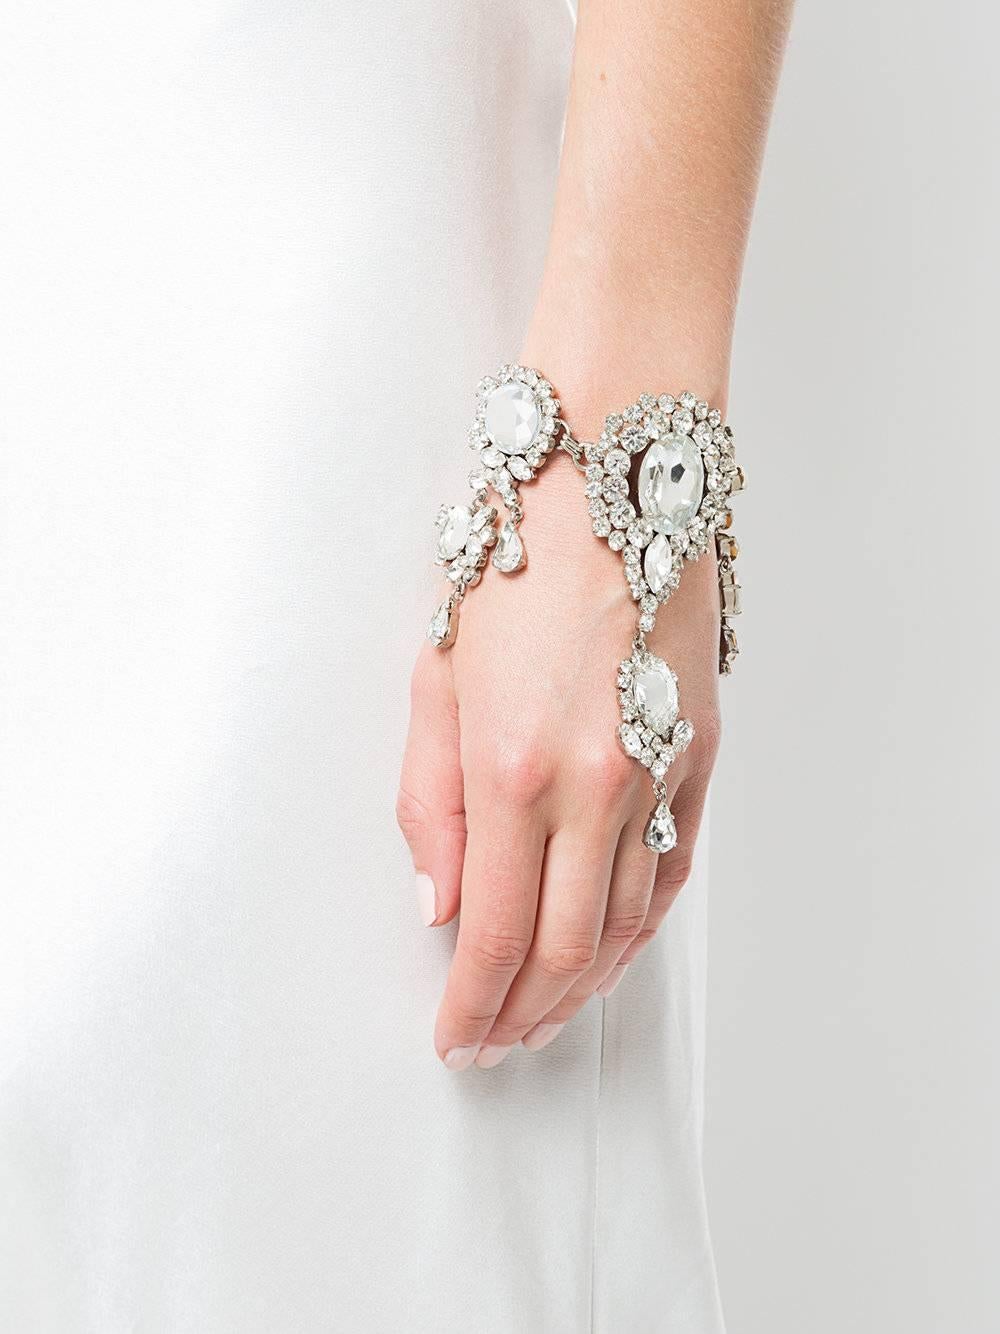 Dolce & Gabbana Silber Kristall Kette Link Abend Dangle Drop Armband in Box 

Metall
Silberfarben
Kristall
Hergestellt in Italien
Gesamtlänge 9